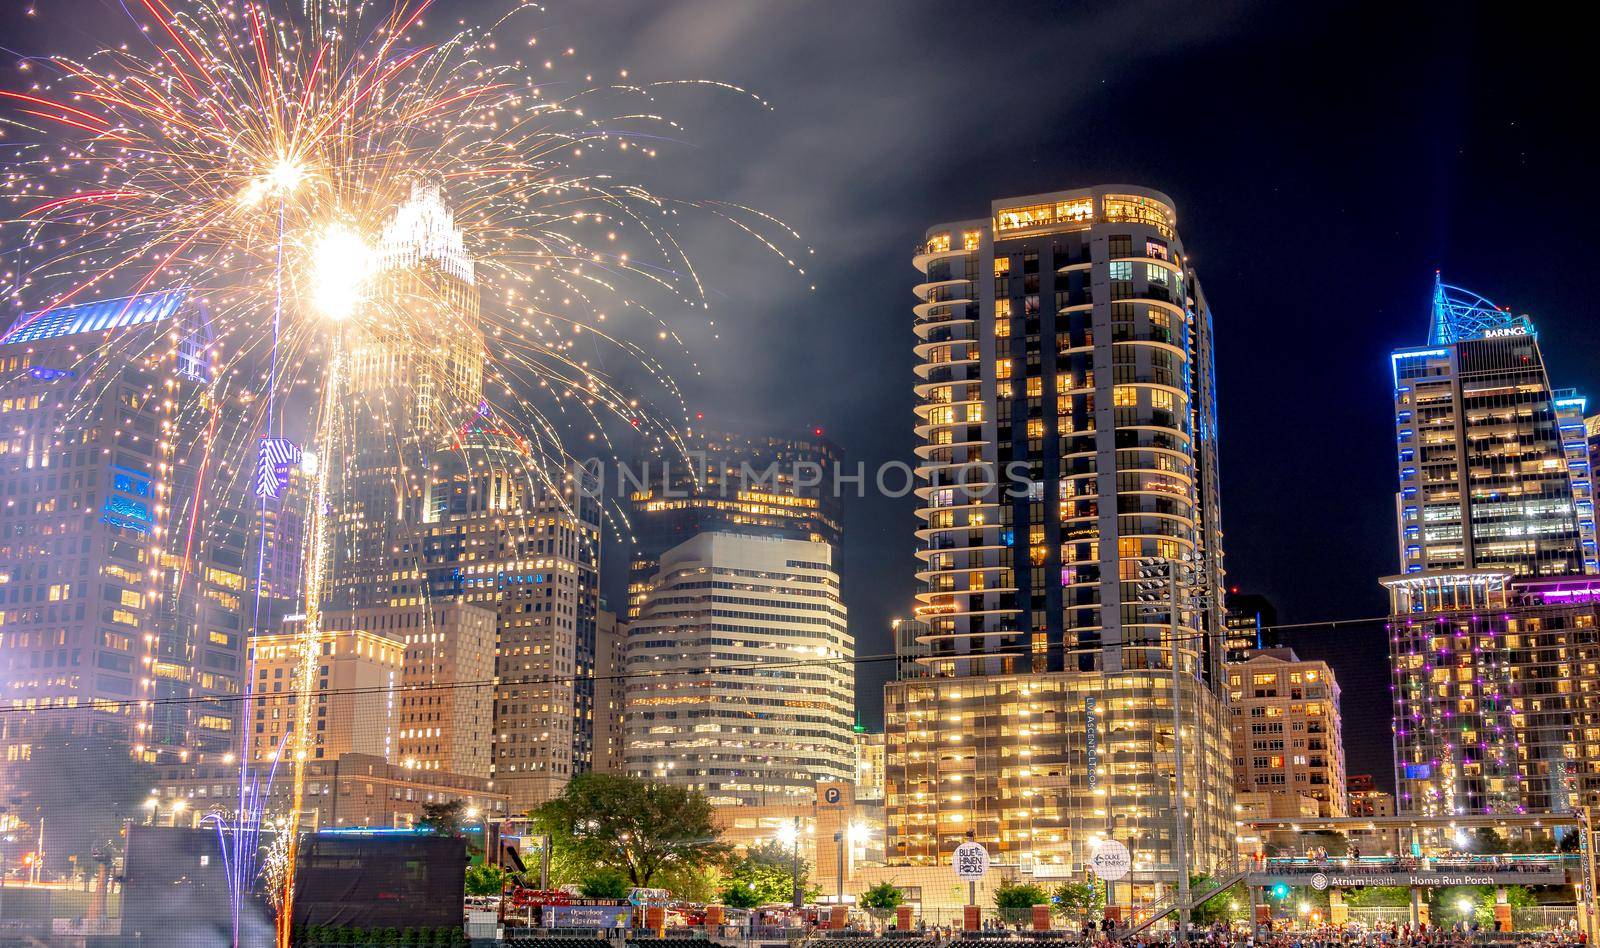 fireworks show over charlotte skyline post baseball game by digidreamgrafix